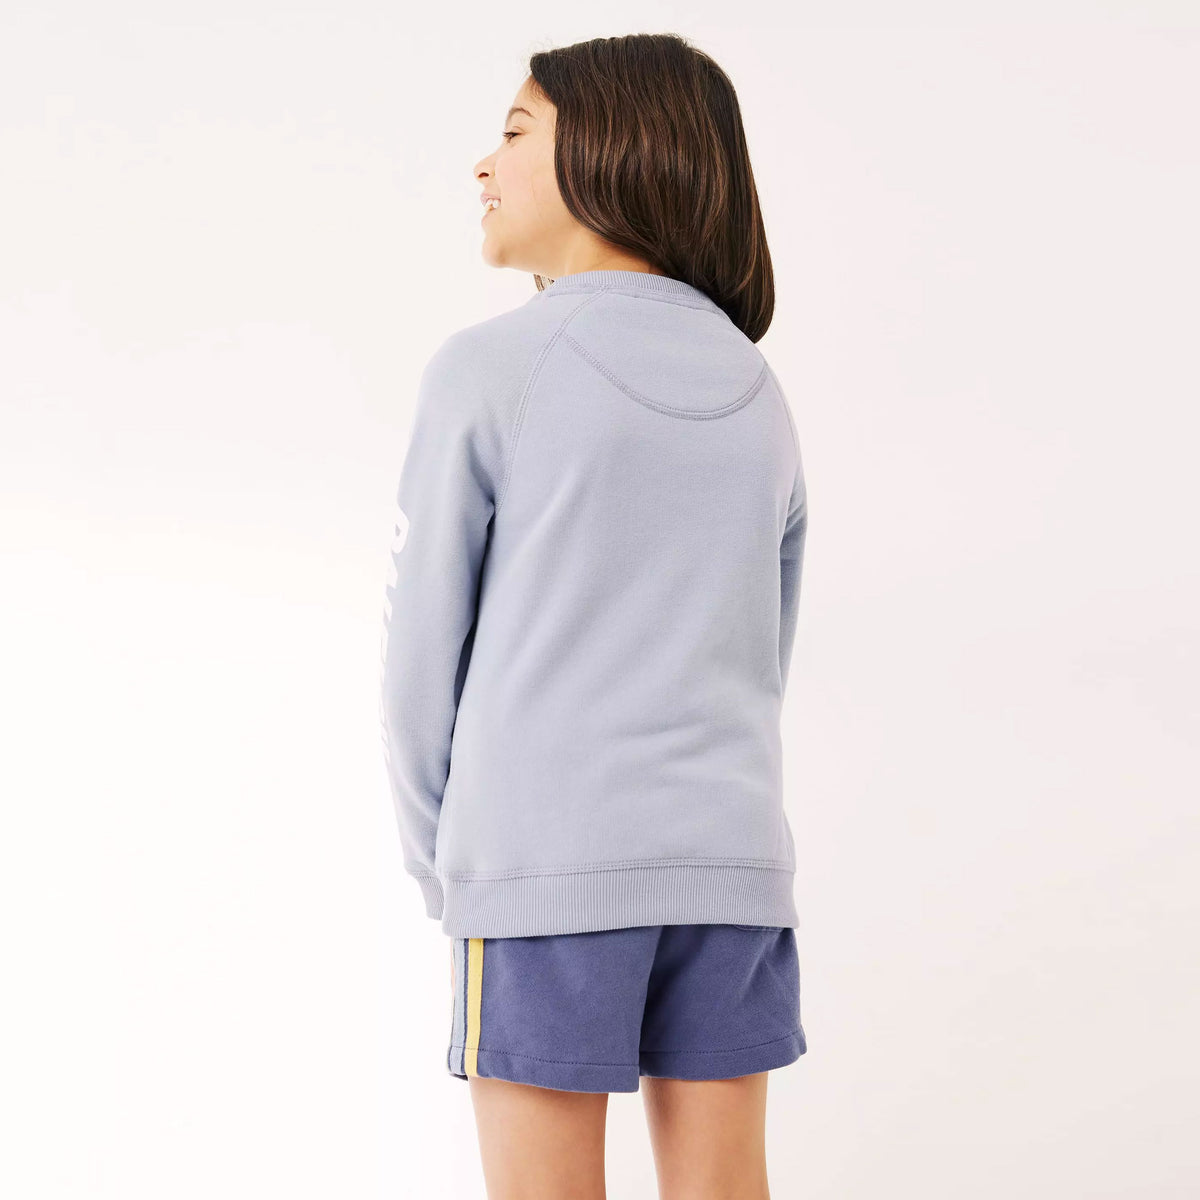 Premium Quality Graphic Fleece Sweatshirt For Girls